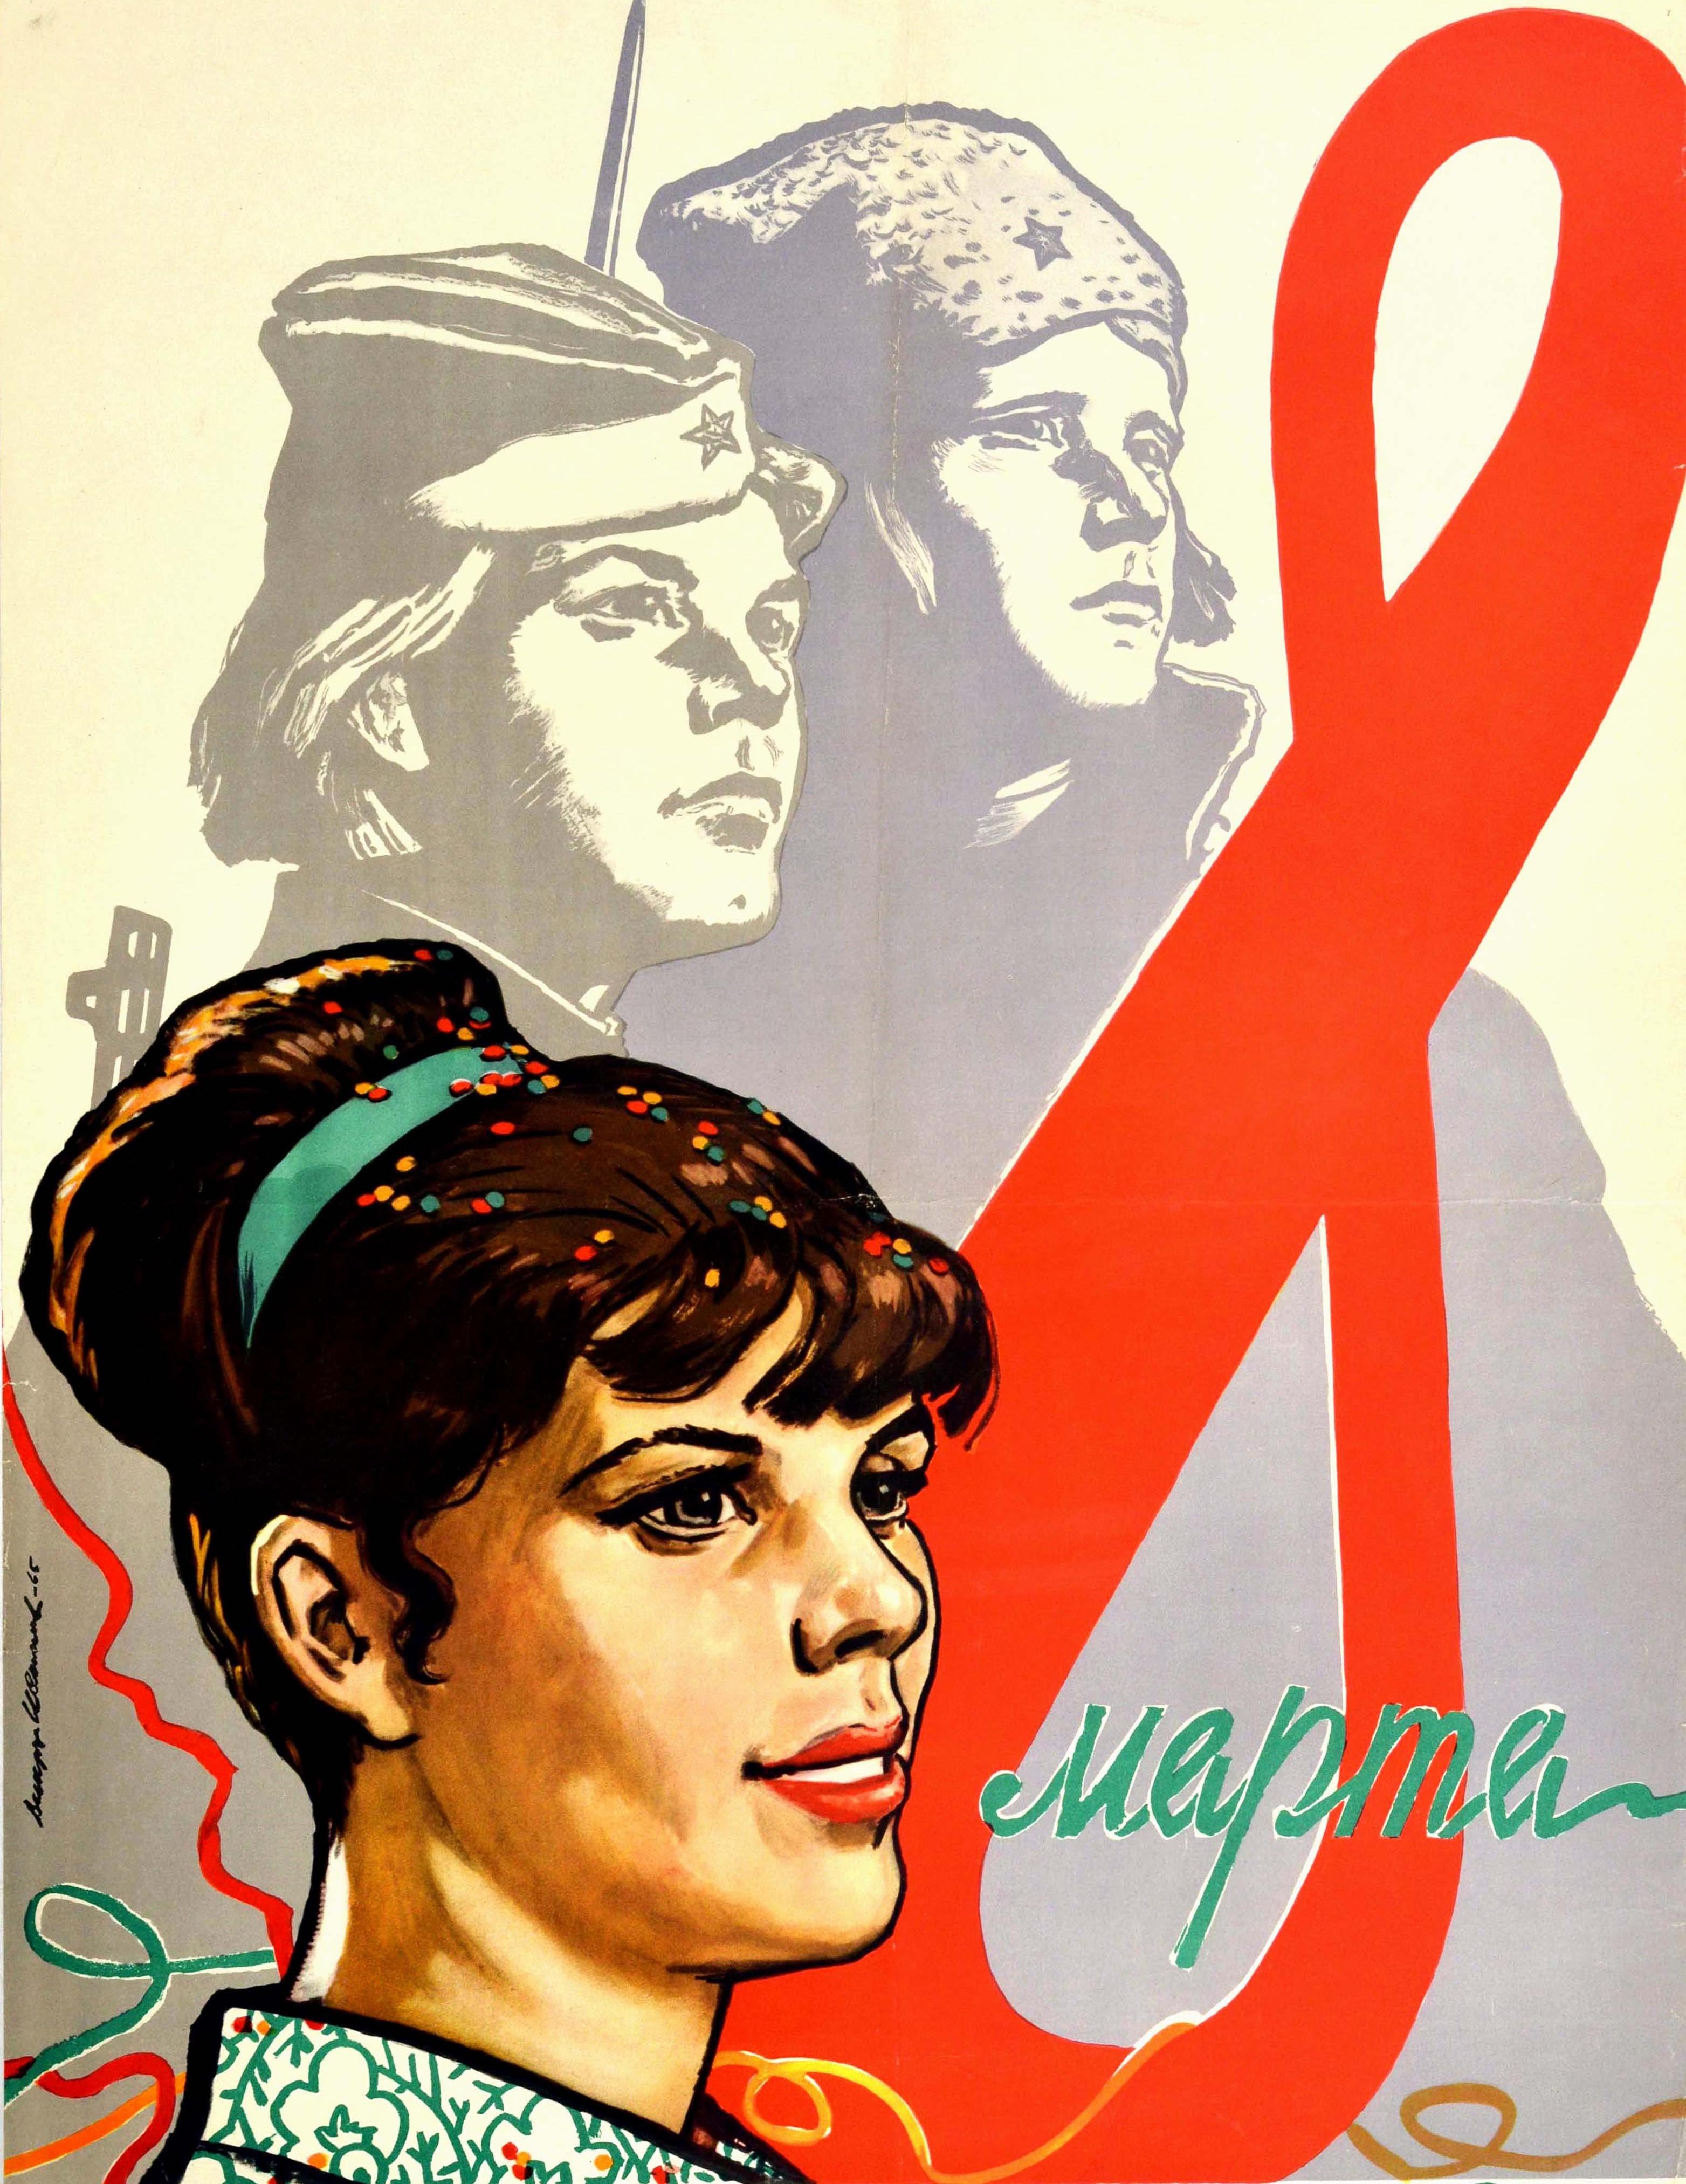 Original Vintage Poster Glory To Women USSR International Women's Day 8 March - Print by V. Ivanov